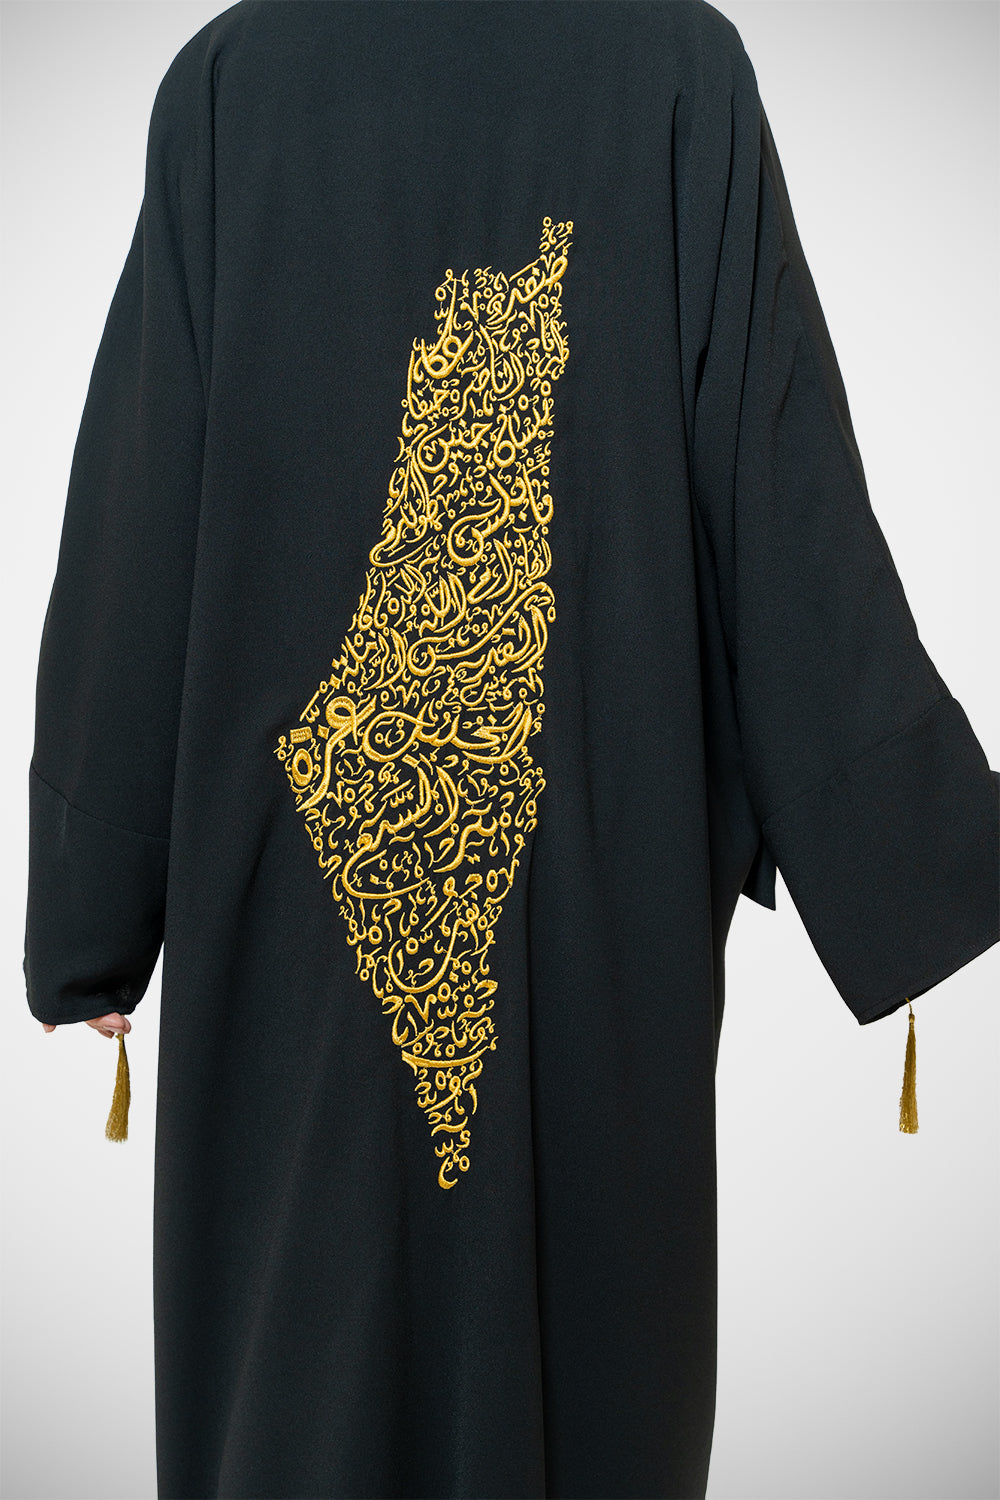 Calligraphic Palestine Modest Open Abaya